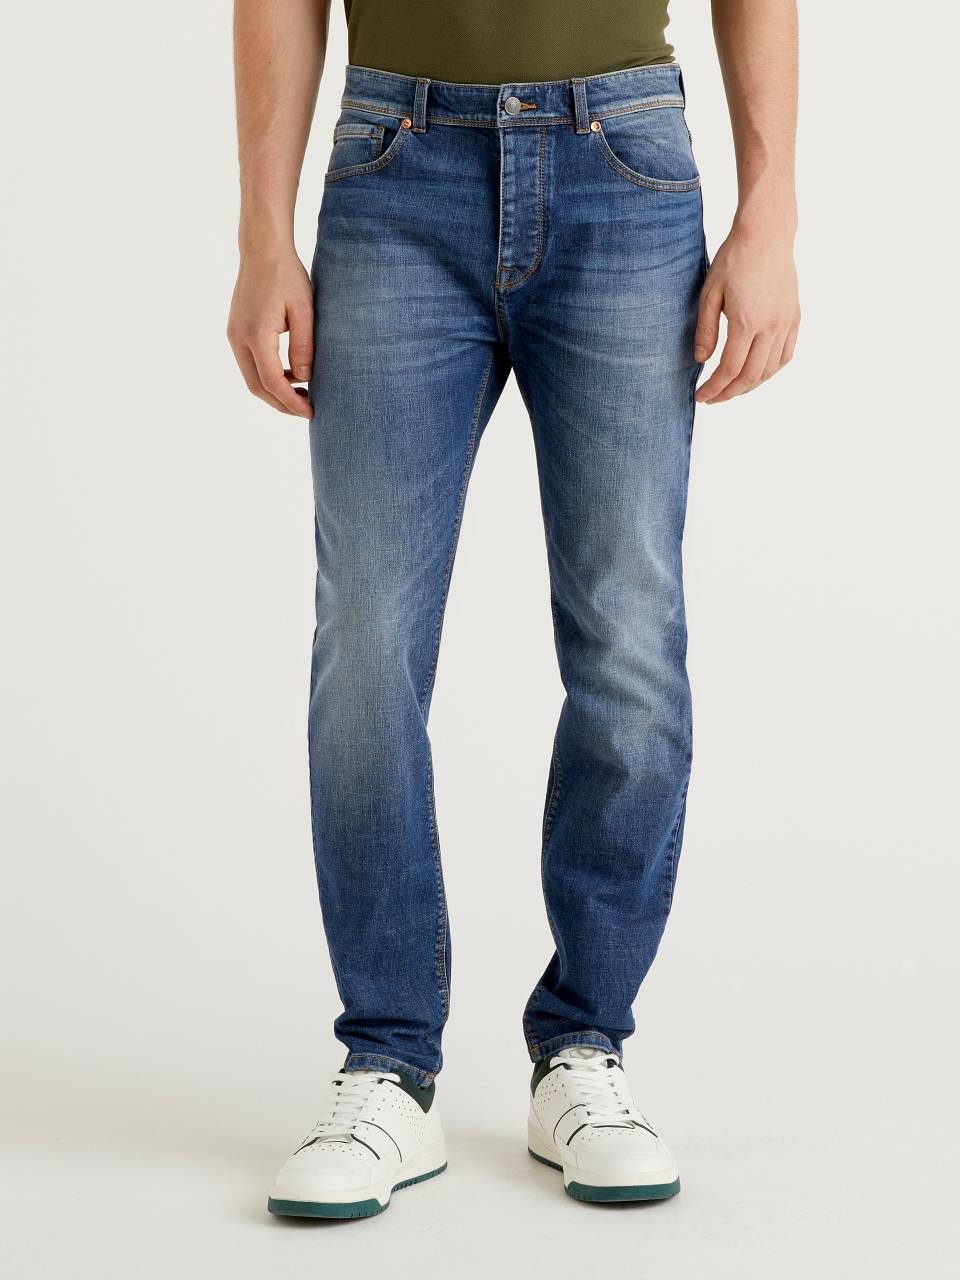 Benetton Skinny fit jeans. 1